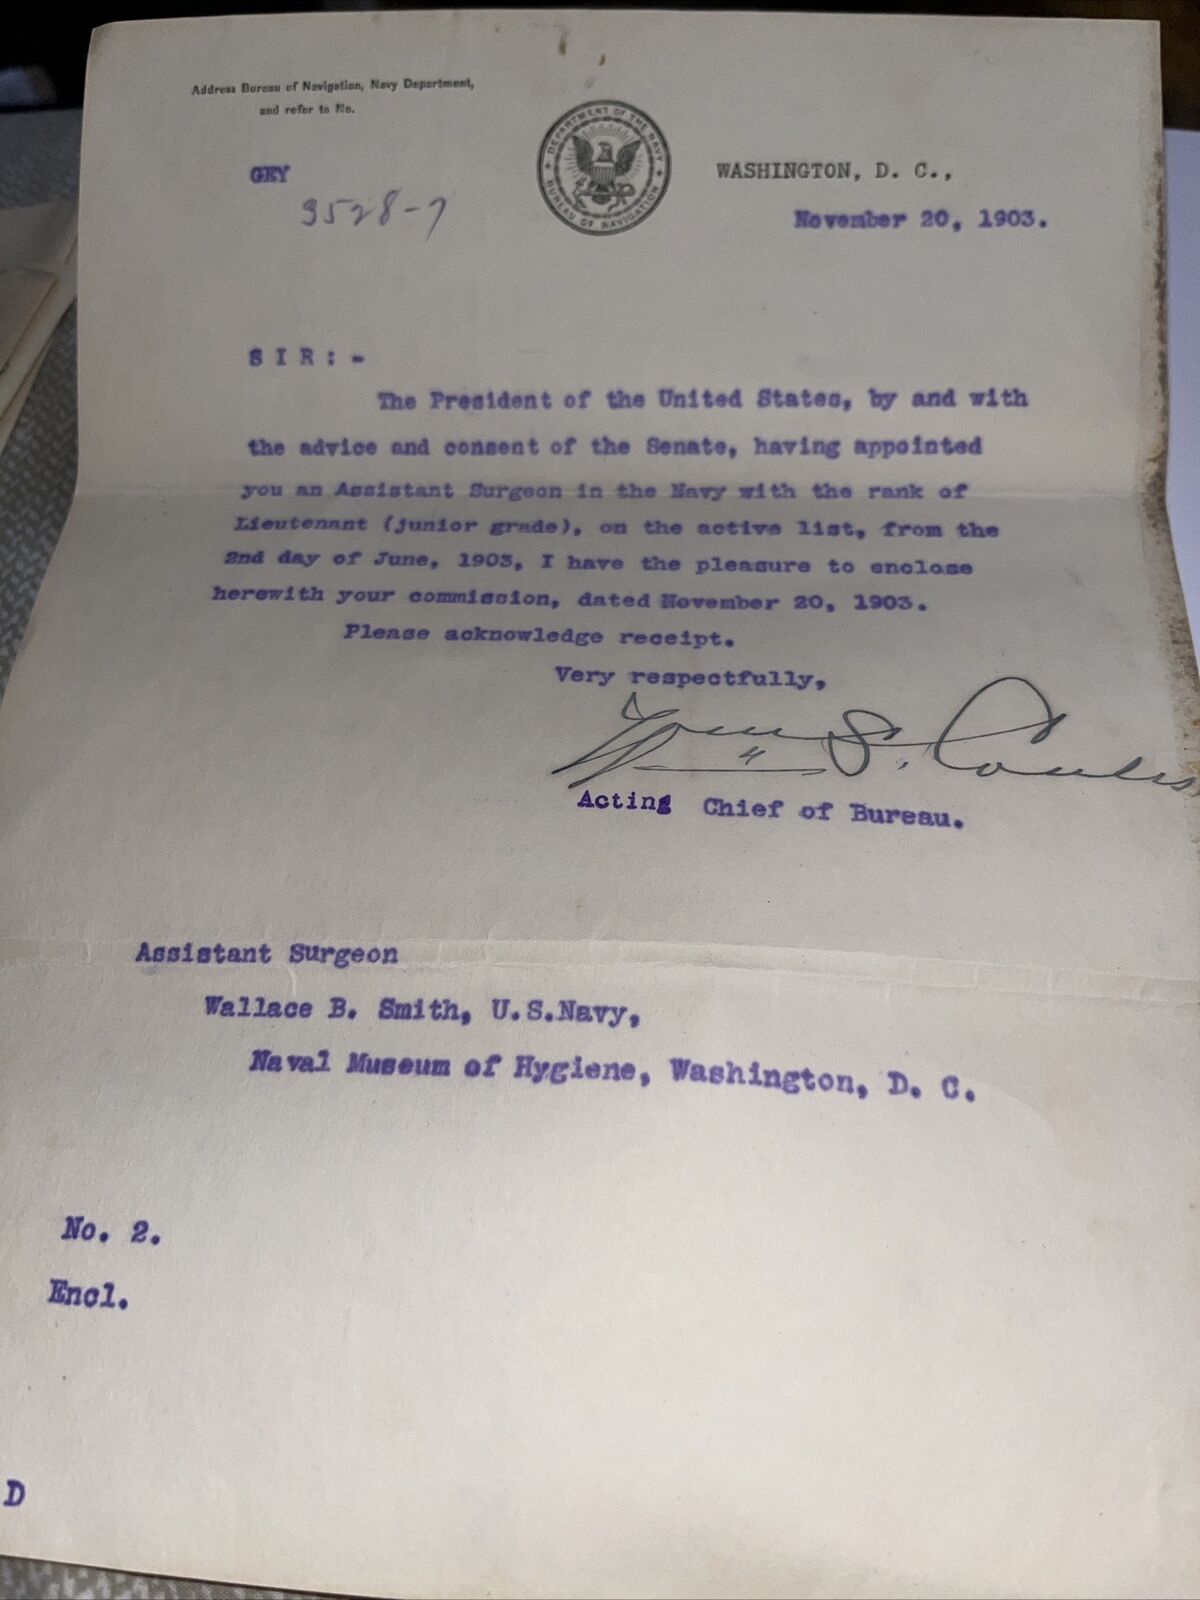 Antique 1903 Letter Announces Presidential Appointment of Assistant Surgeon LT